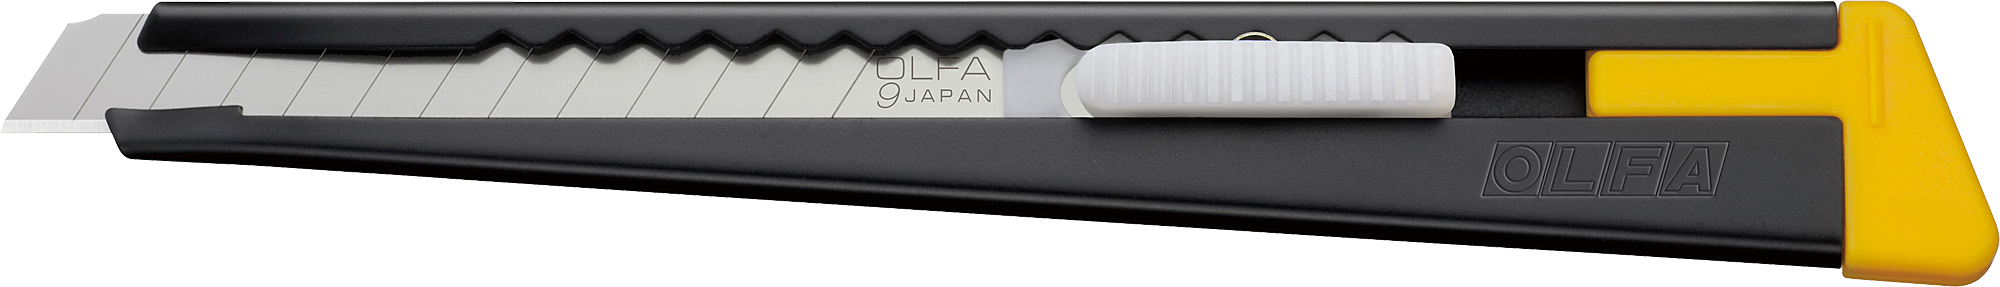 Нож с металлическим корпусом 9 мм OLFA OL-180-BLACK - фото